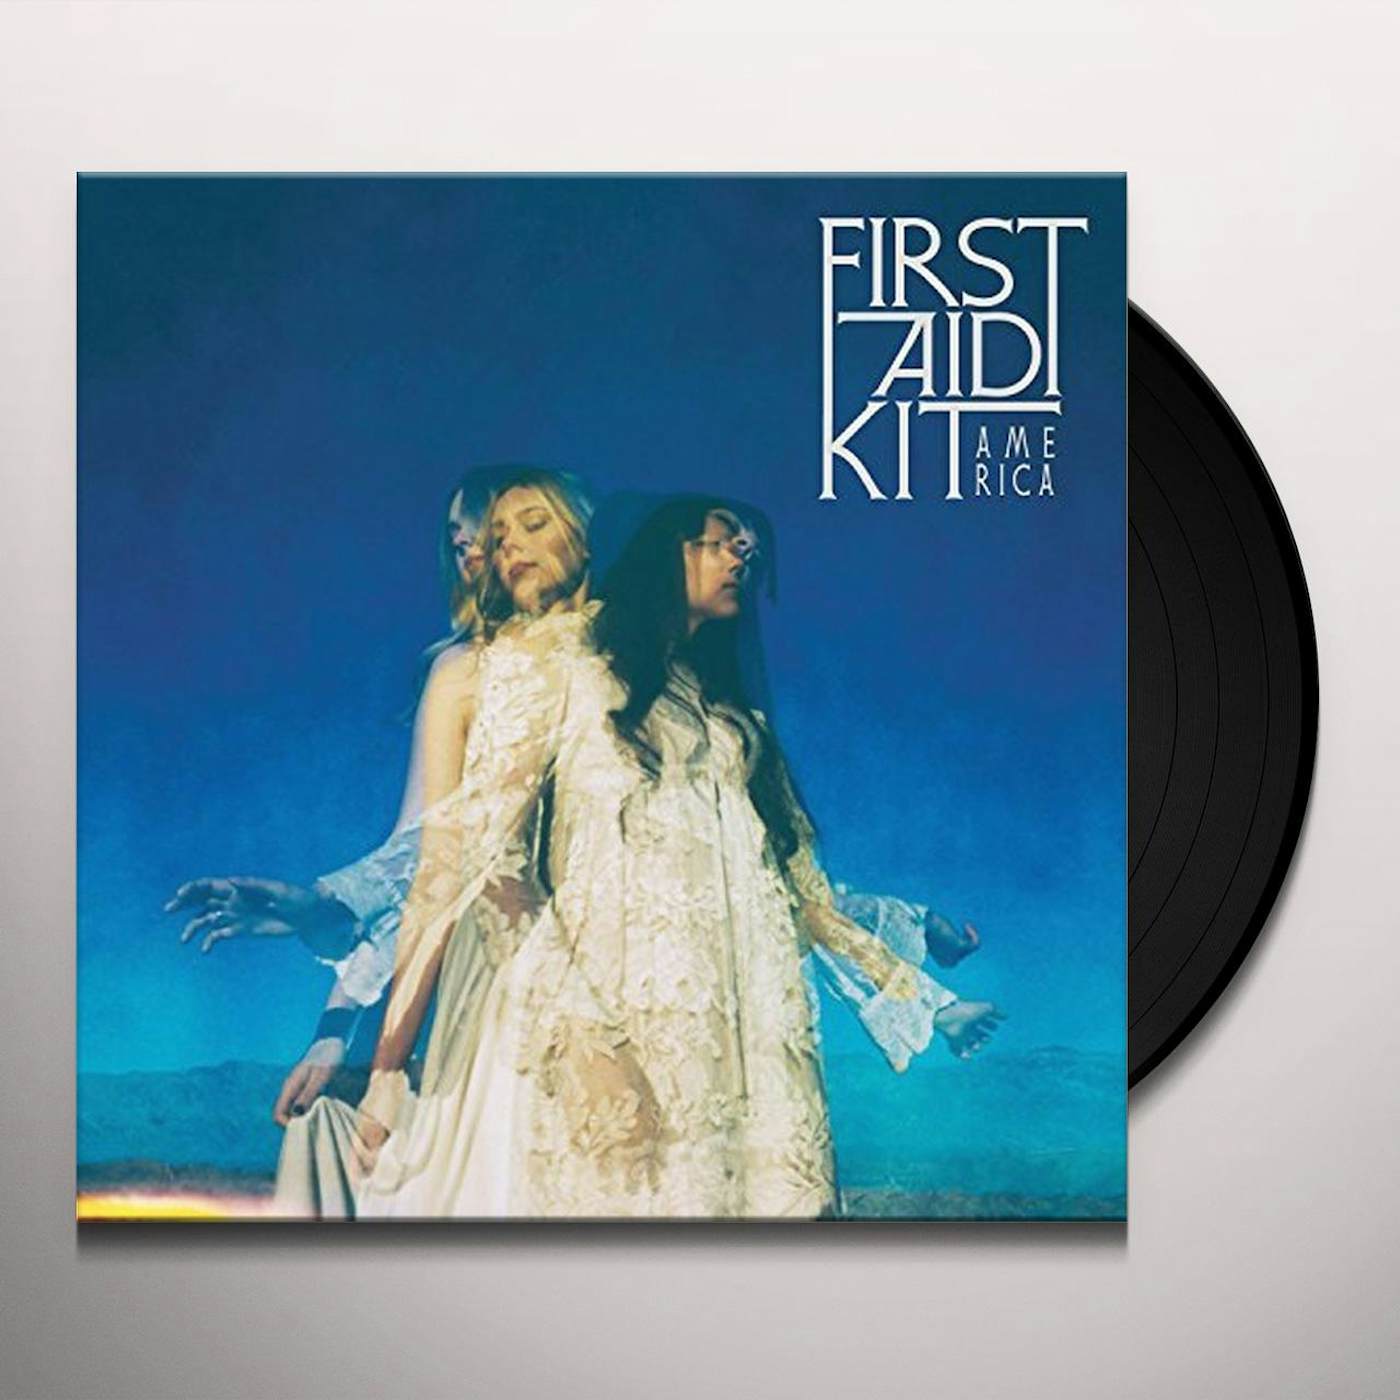 First Aid Kit America Vinyl Record